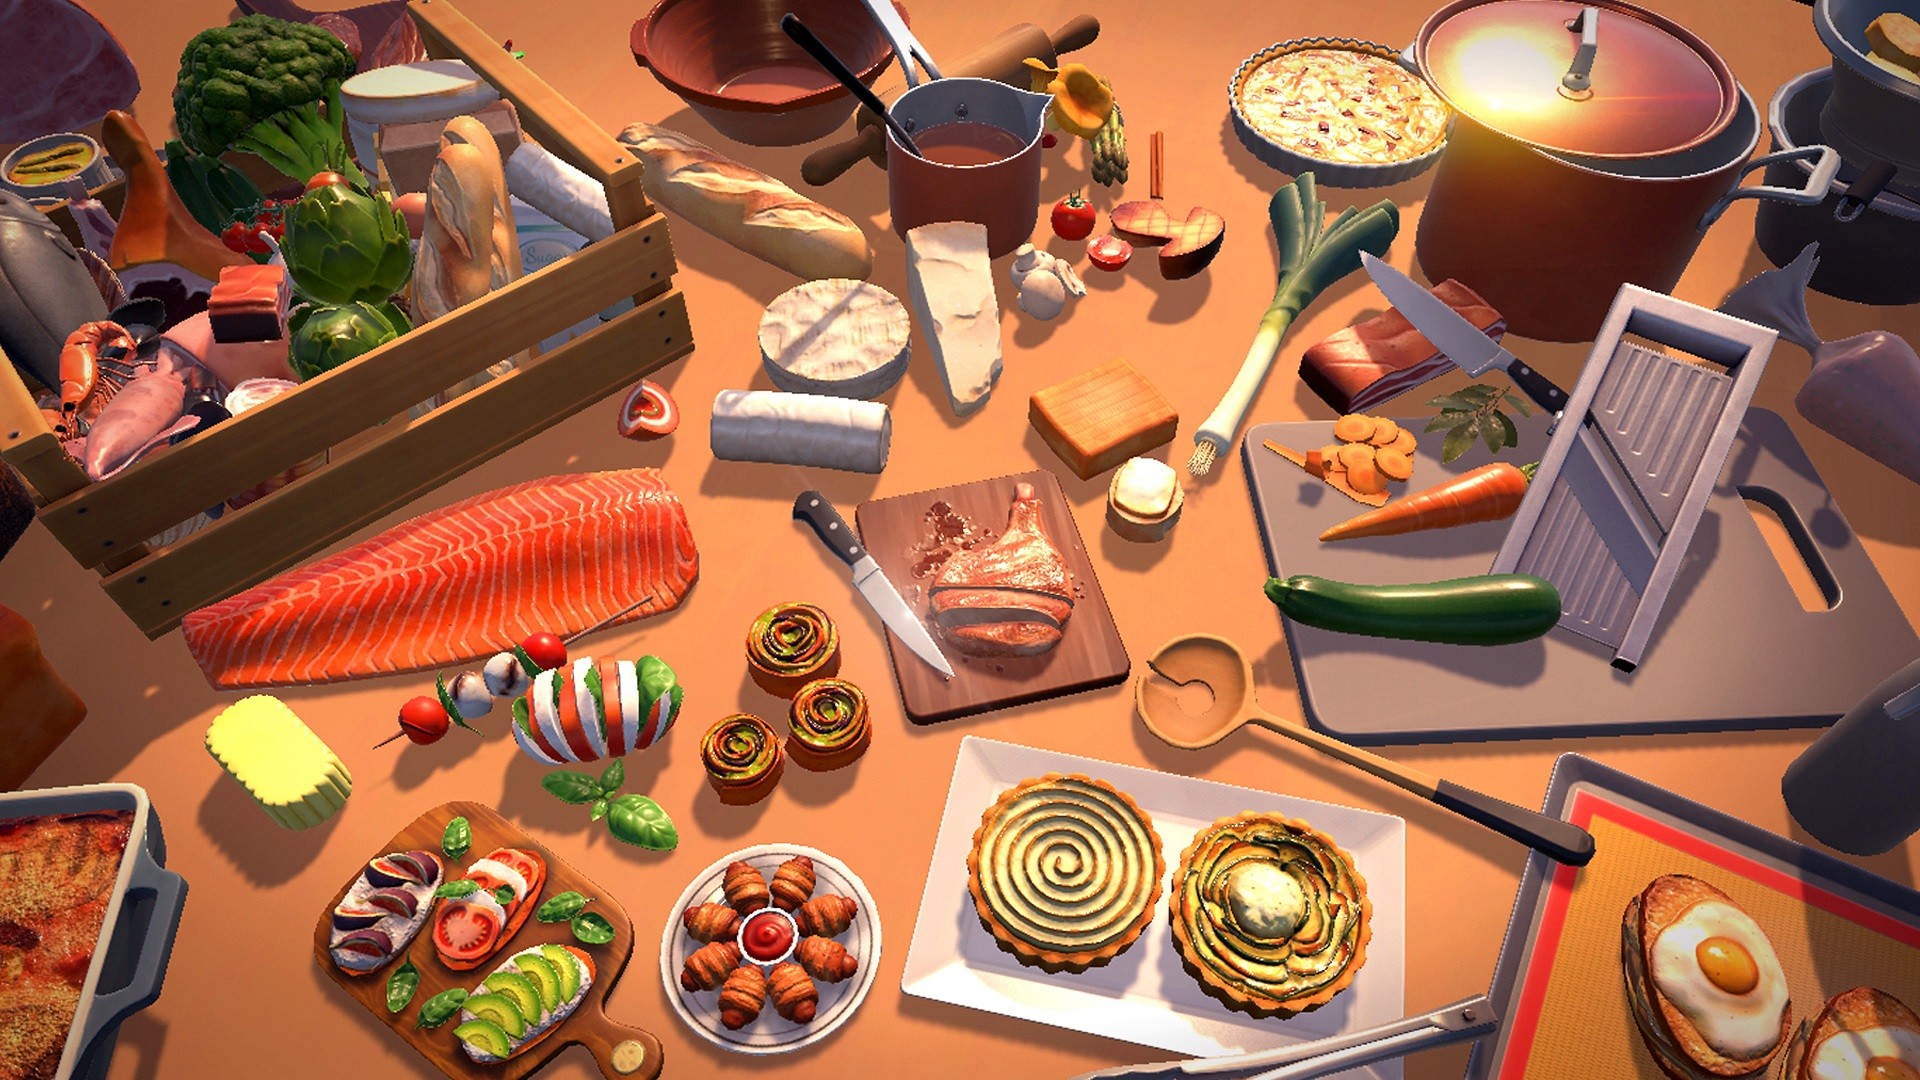 Chef Life: A Restaurant Simulator Steam CD Key